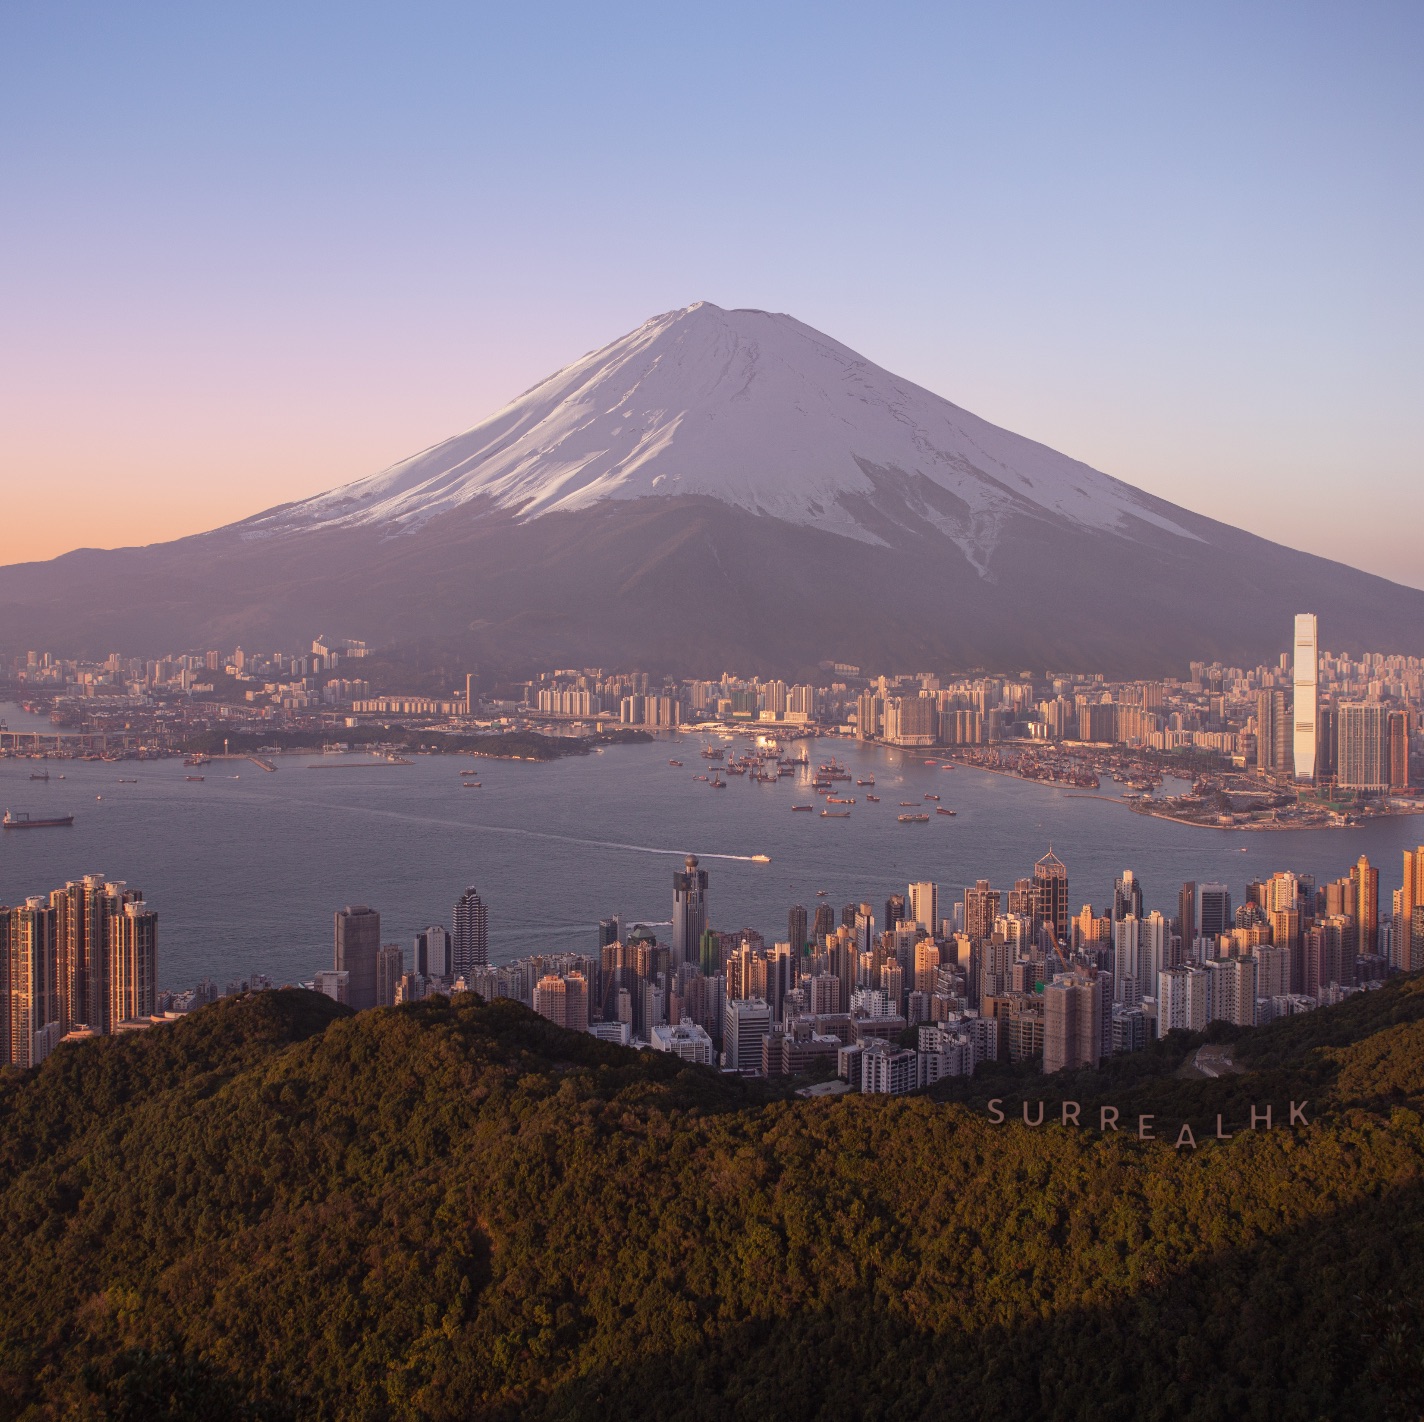 surrealhk Tommy Fung Photoshop 改圖 攝影 個展 山景 富士山